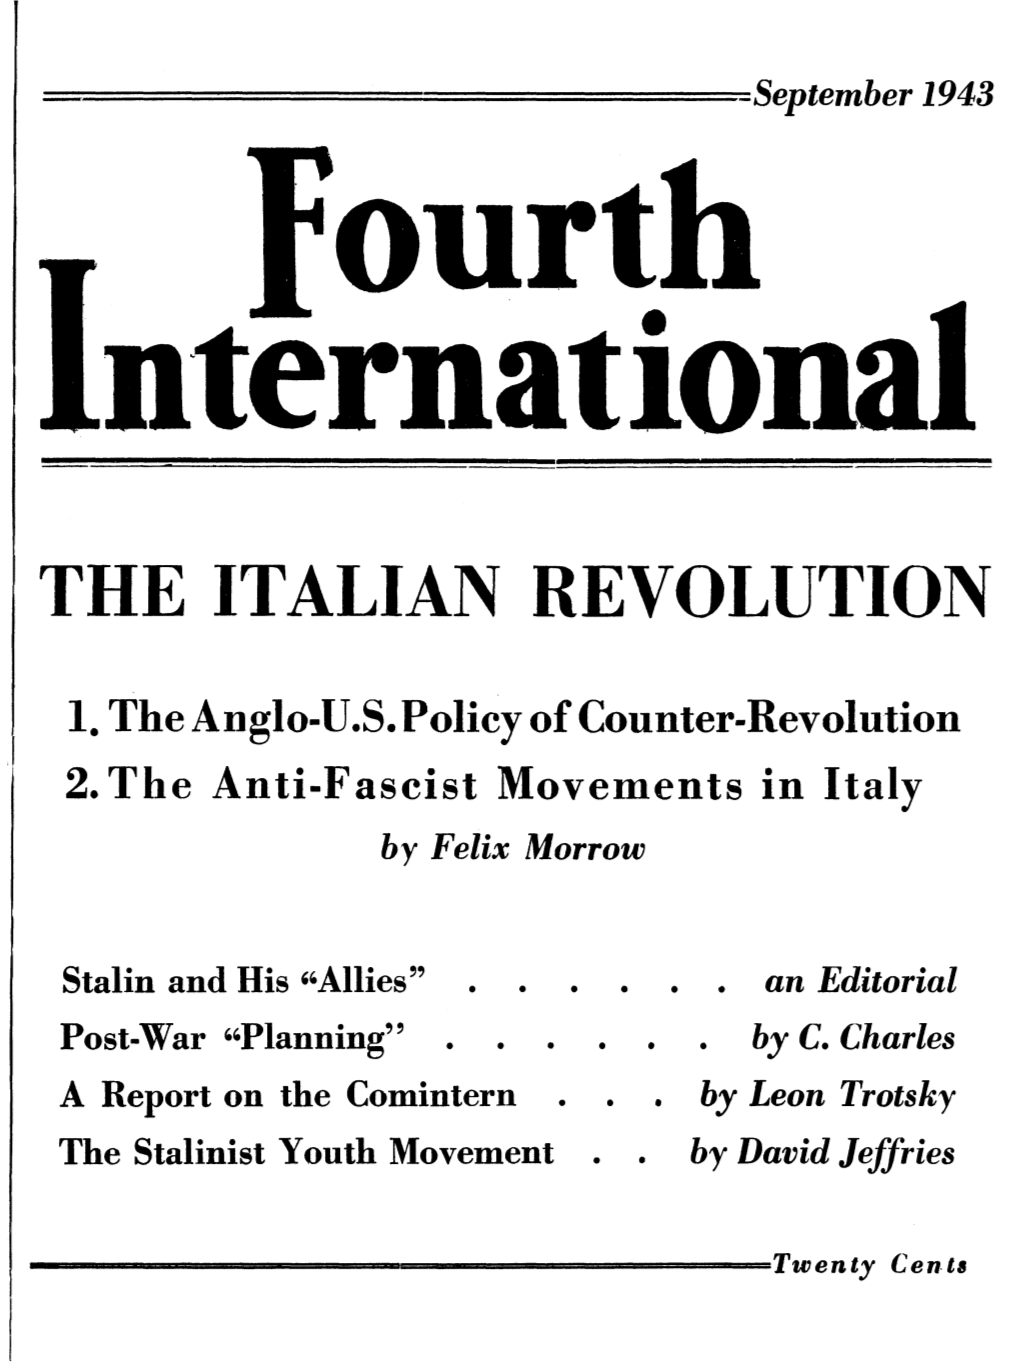 The Italian Revolution